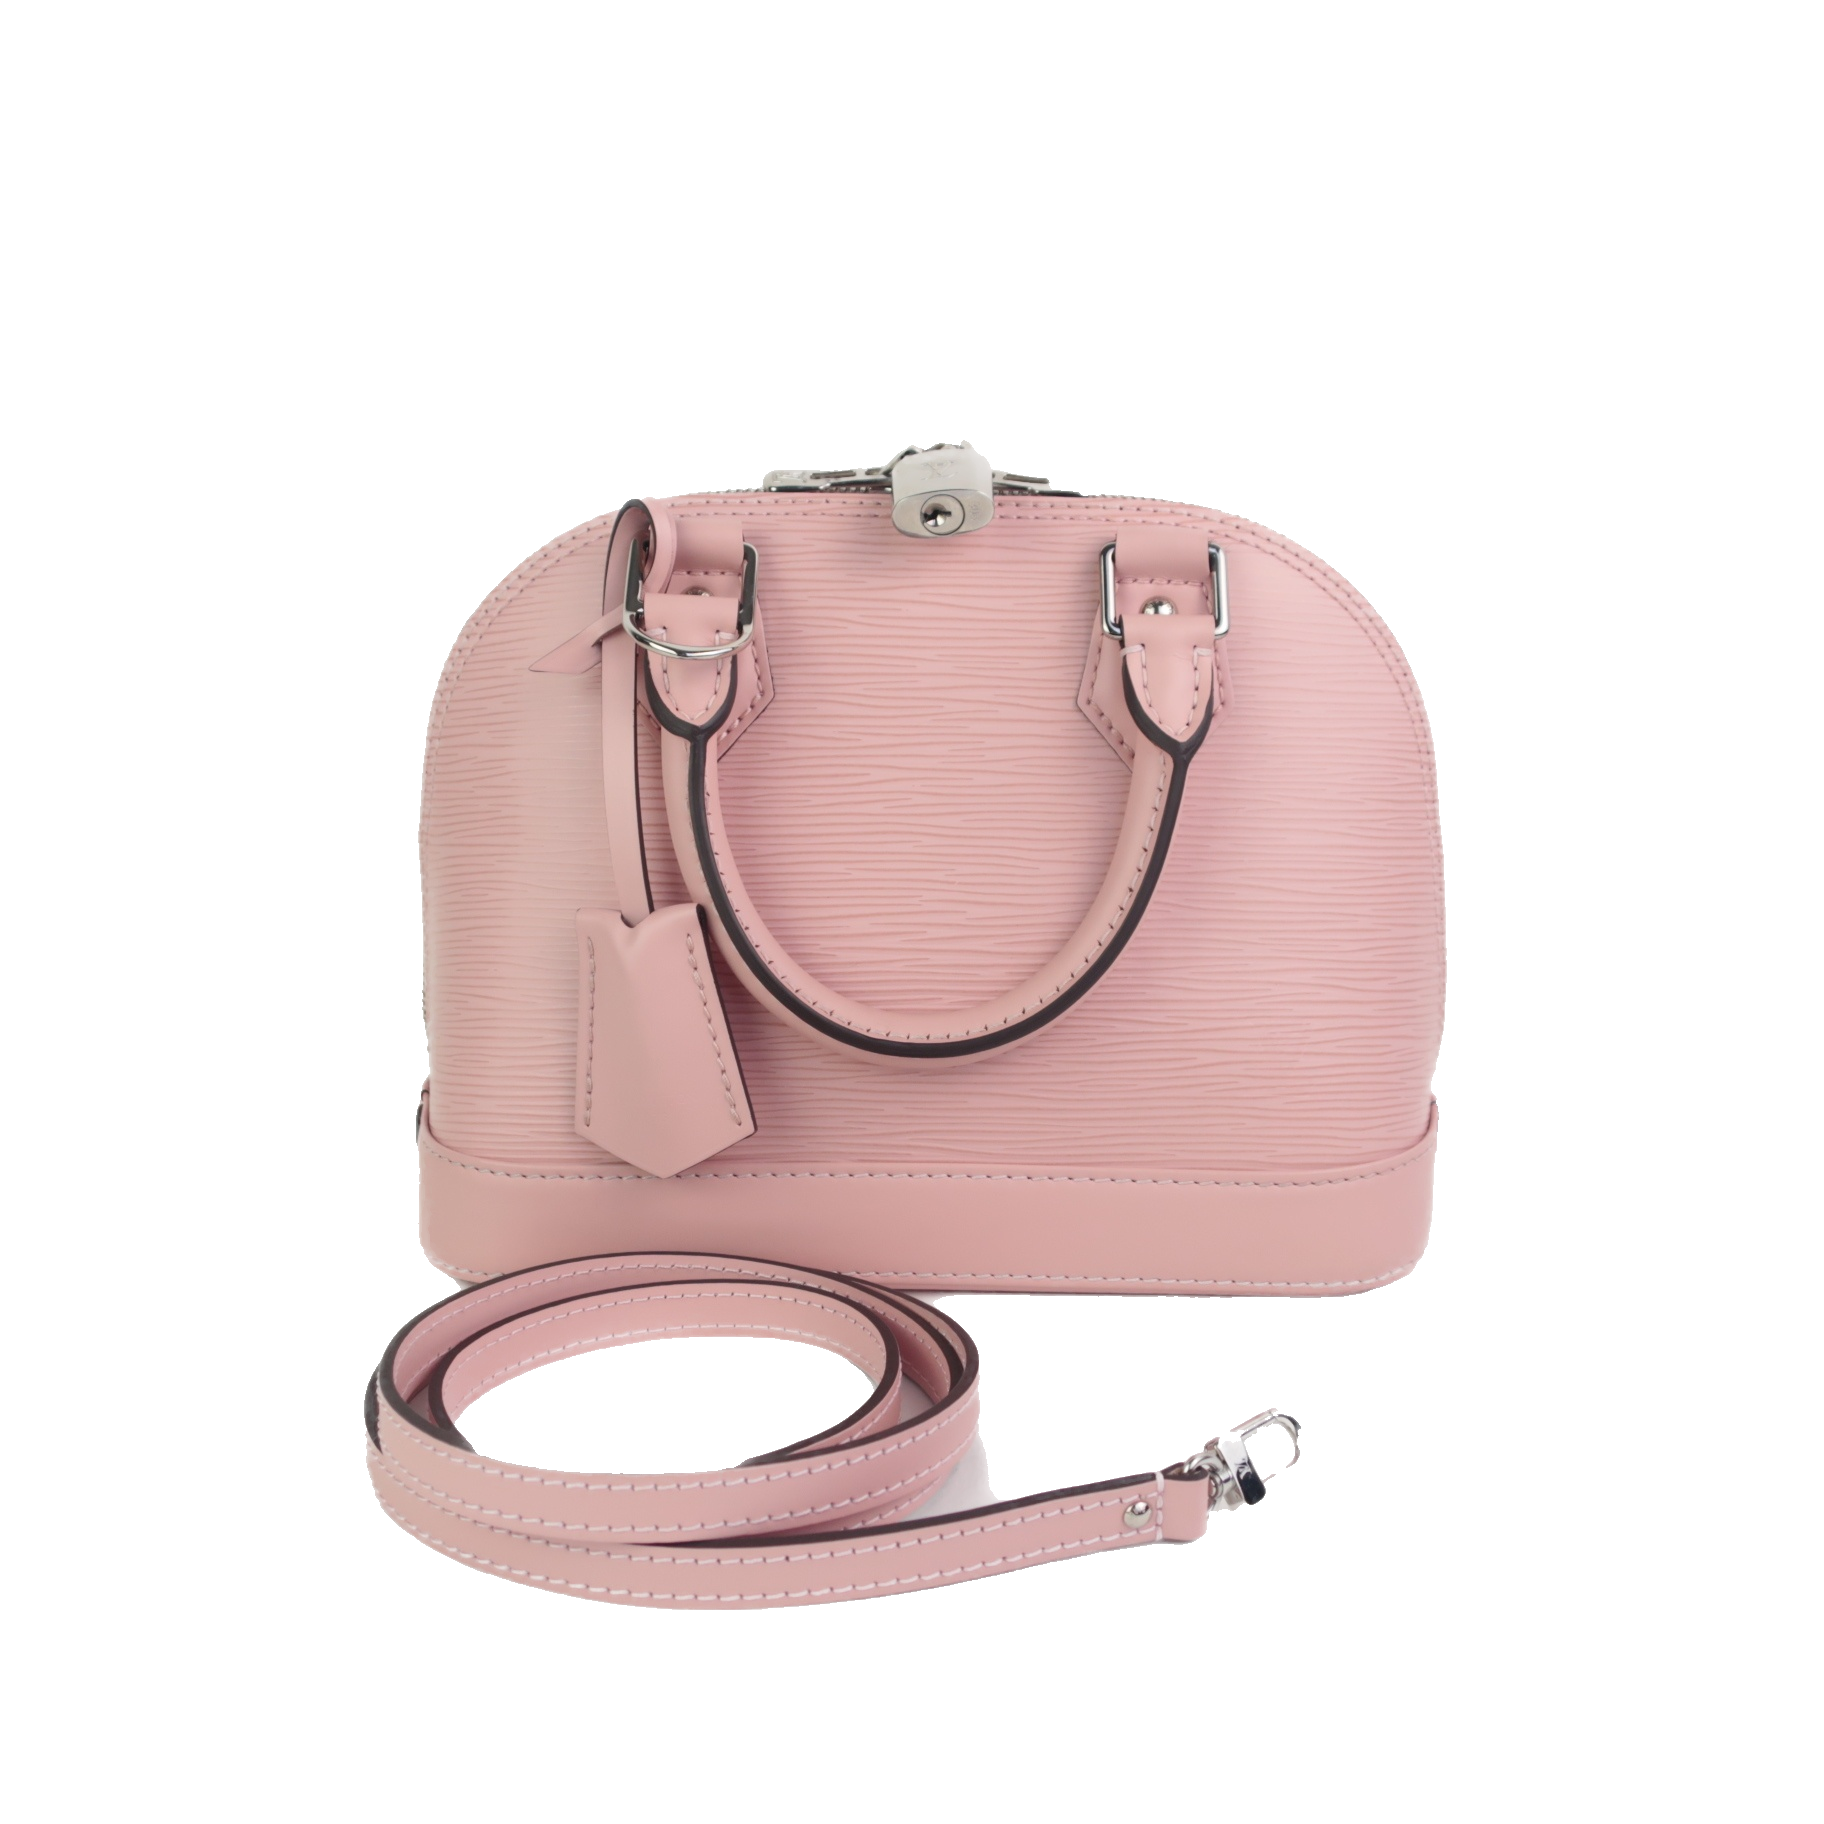 Top 10 Pink Luxury Designer Handbags from Louis Vuitton, Hermes, Dior